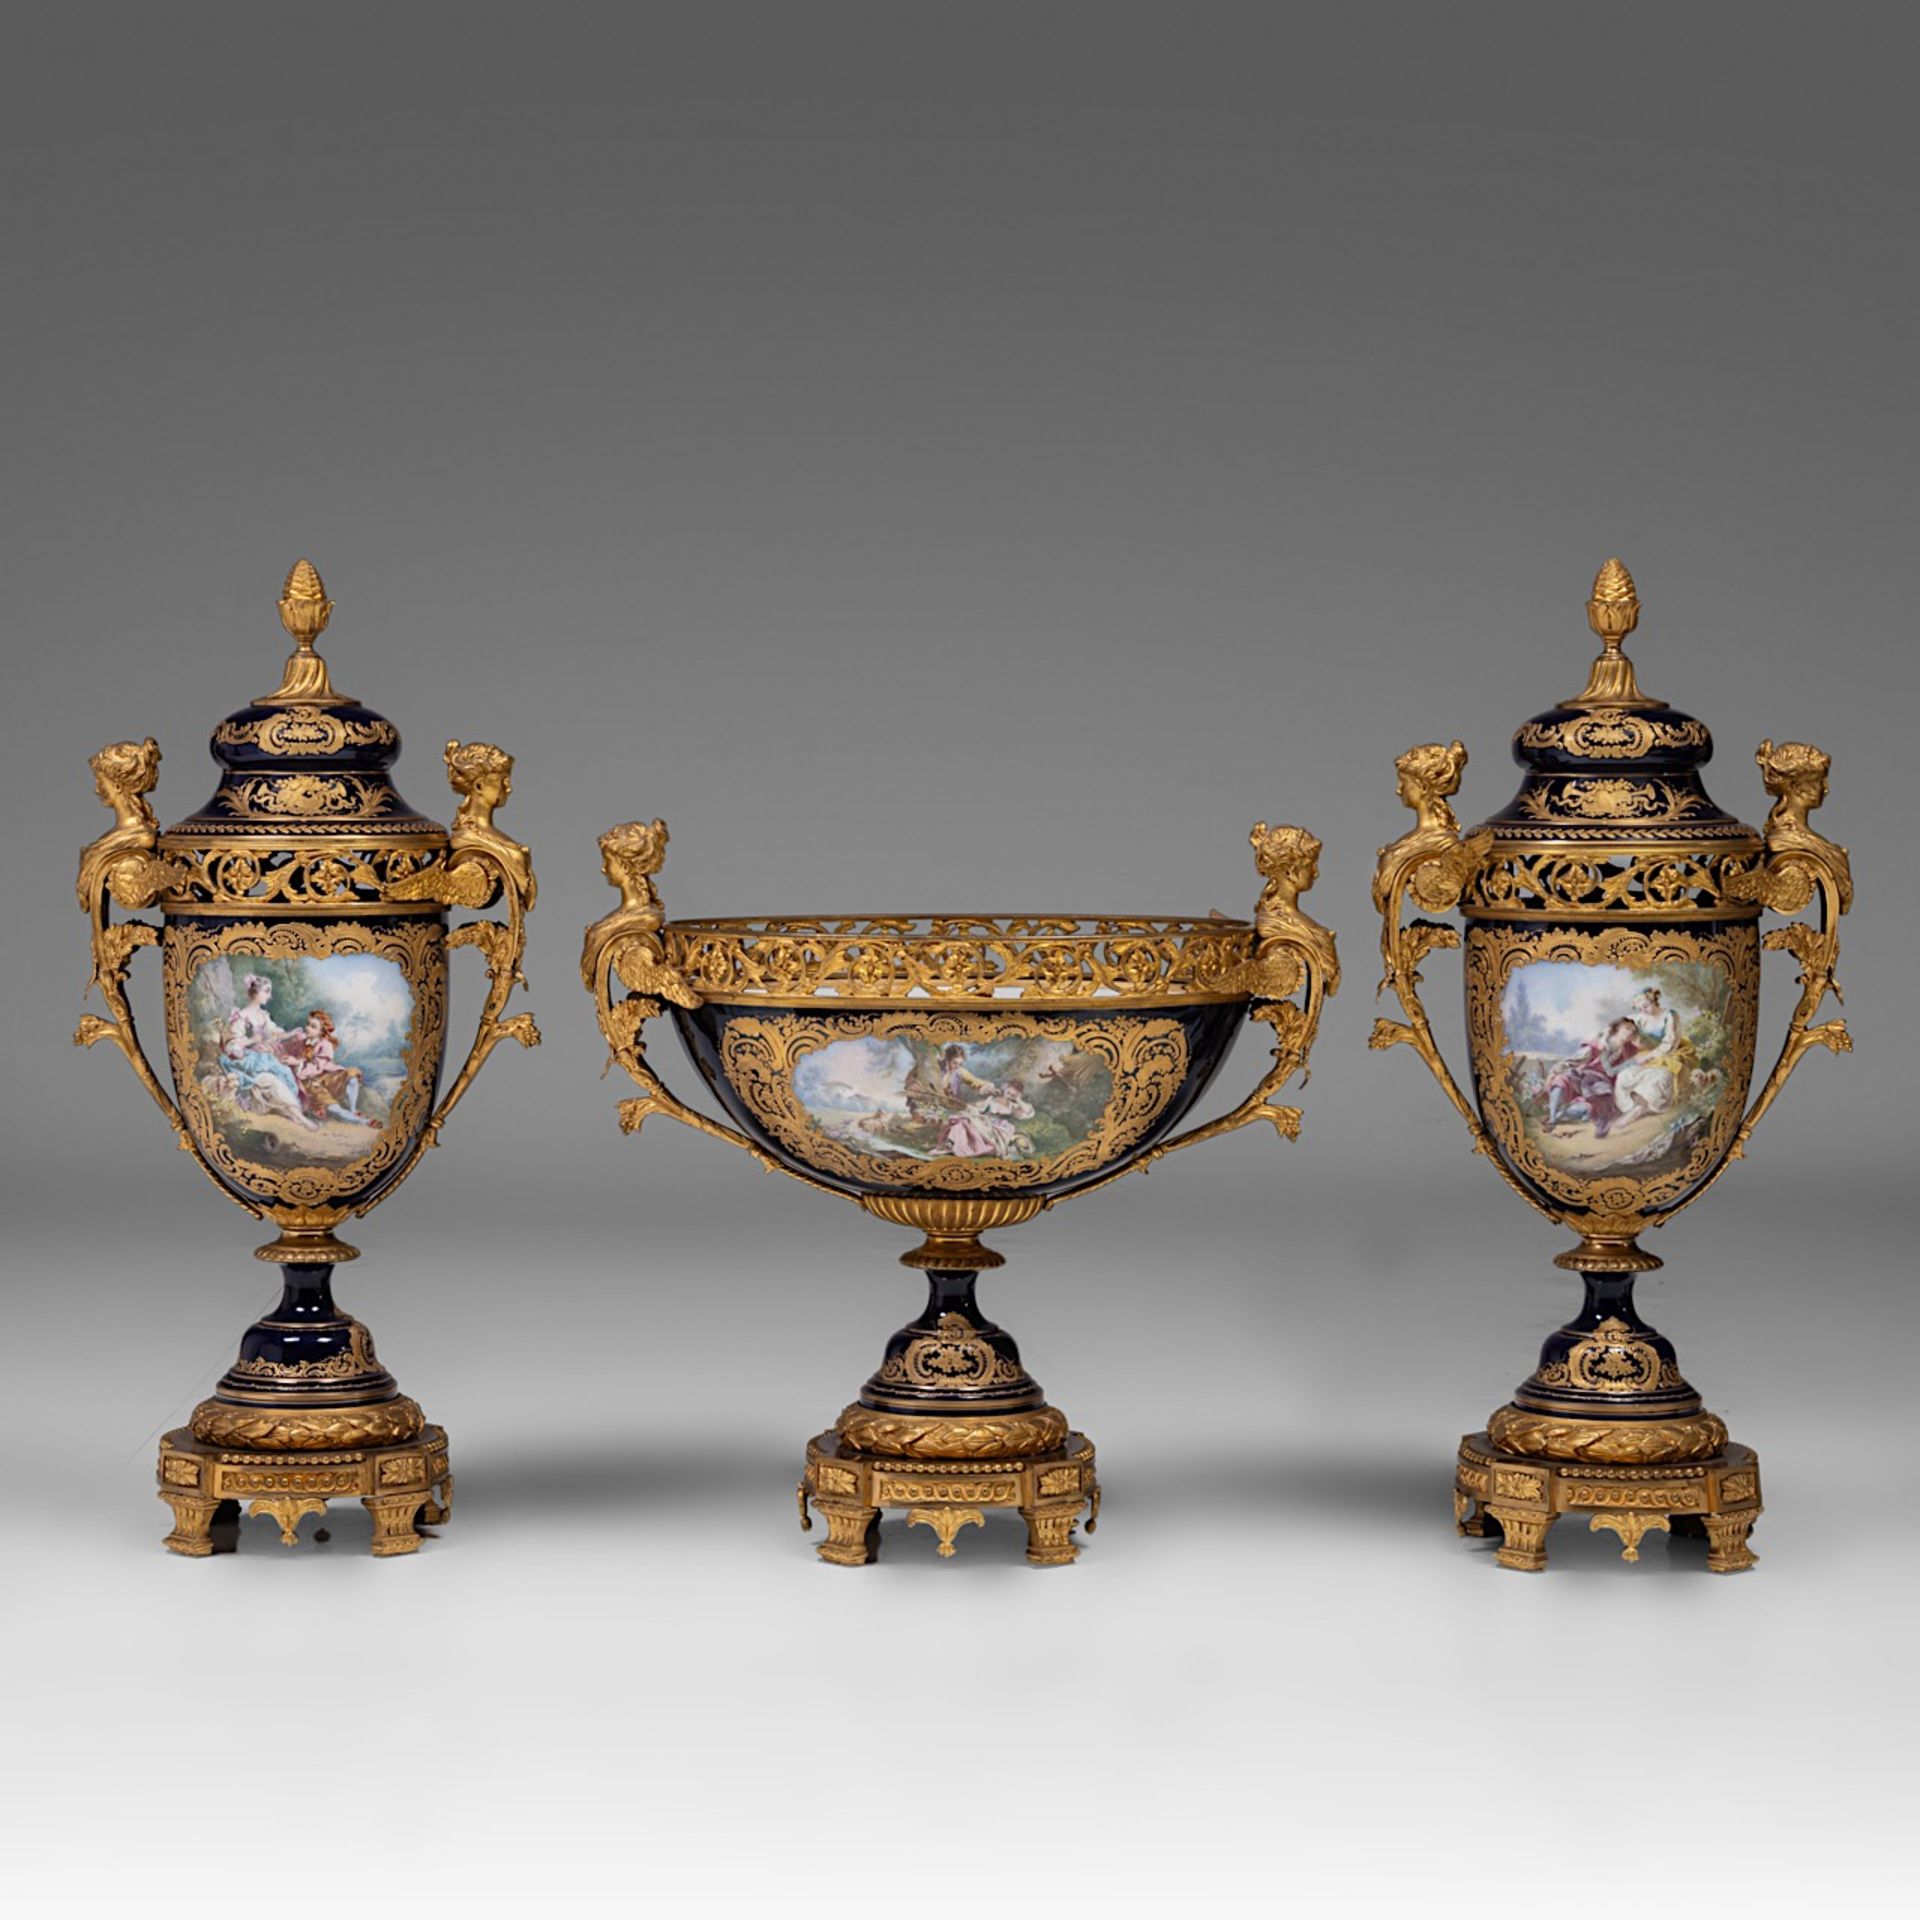 An imposing three-piece Sevres porcelain garniture set, H 53,5 - 72,5 cm